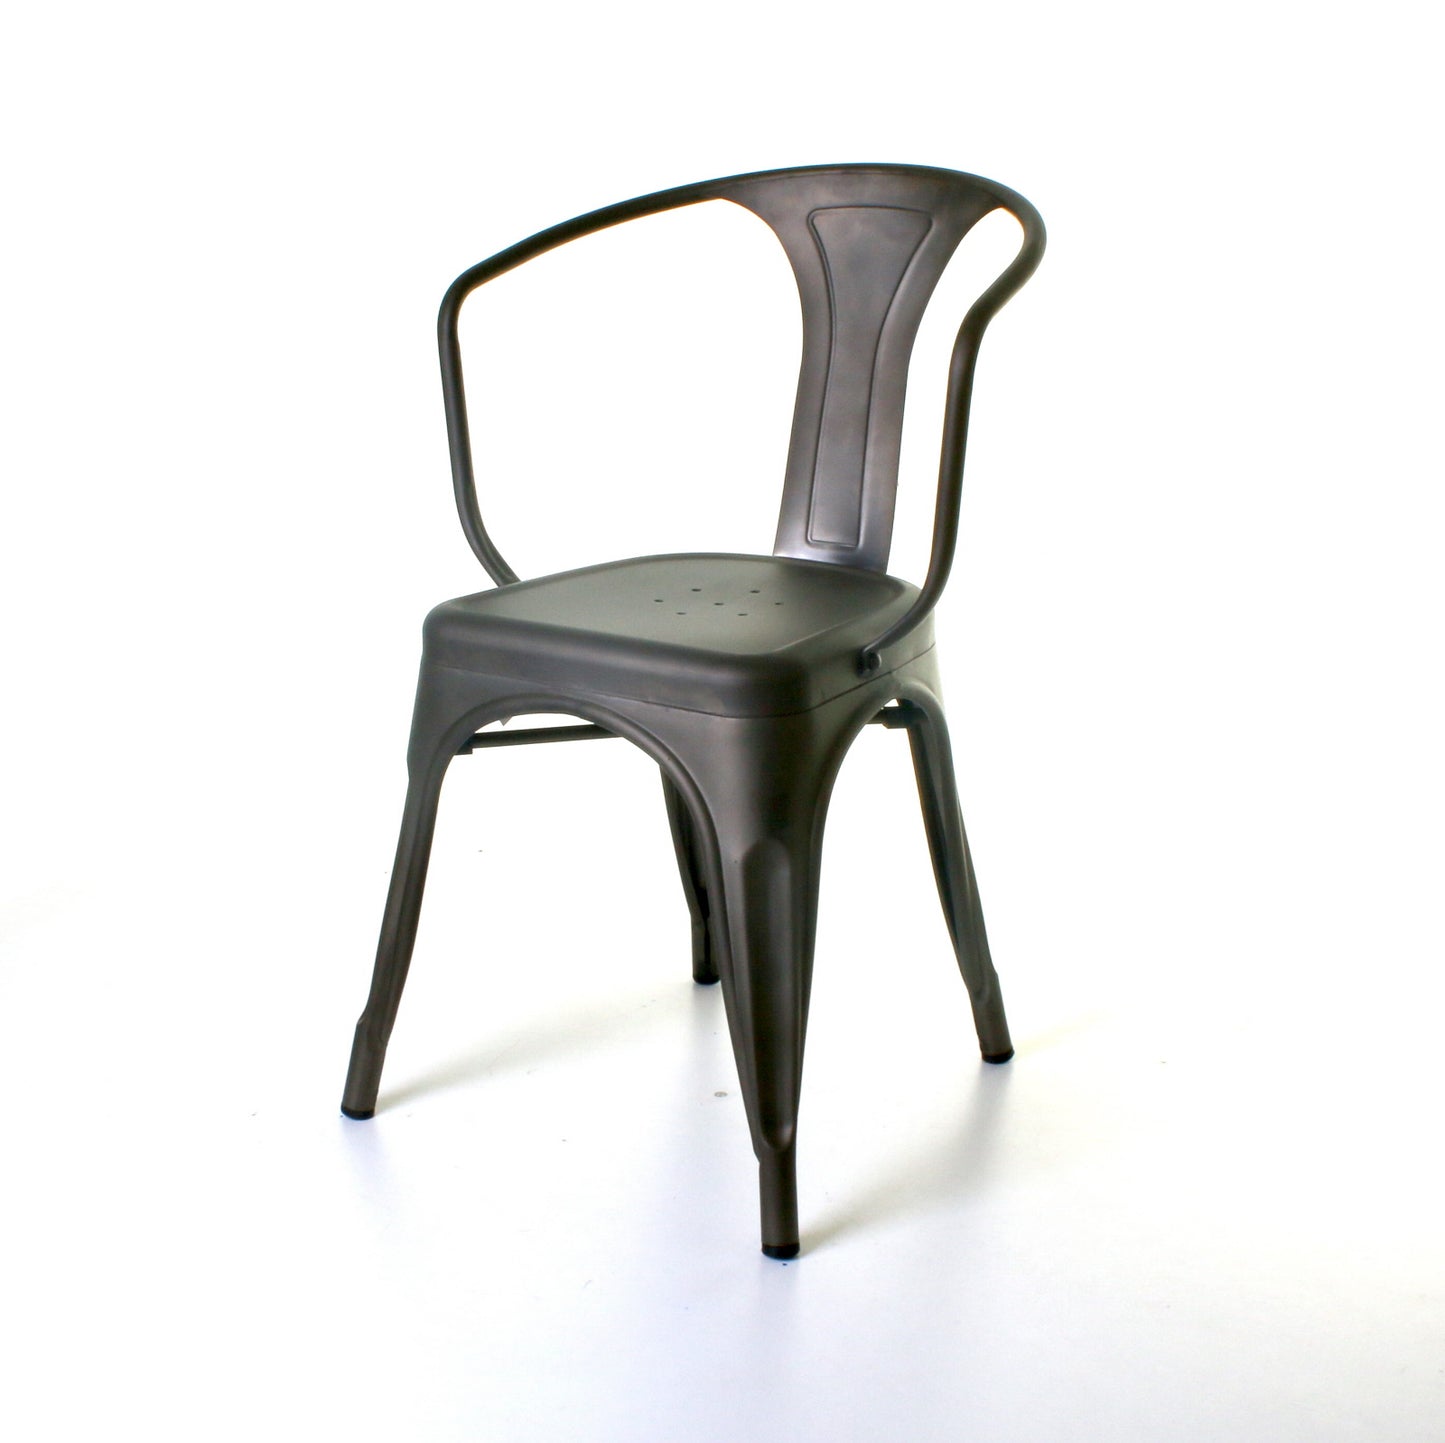 7PC Taranto Table, 3 Forli Chairs & 3 Castel Stools Set - Graphite Grey